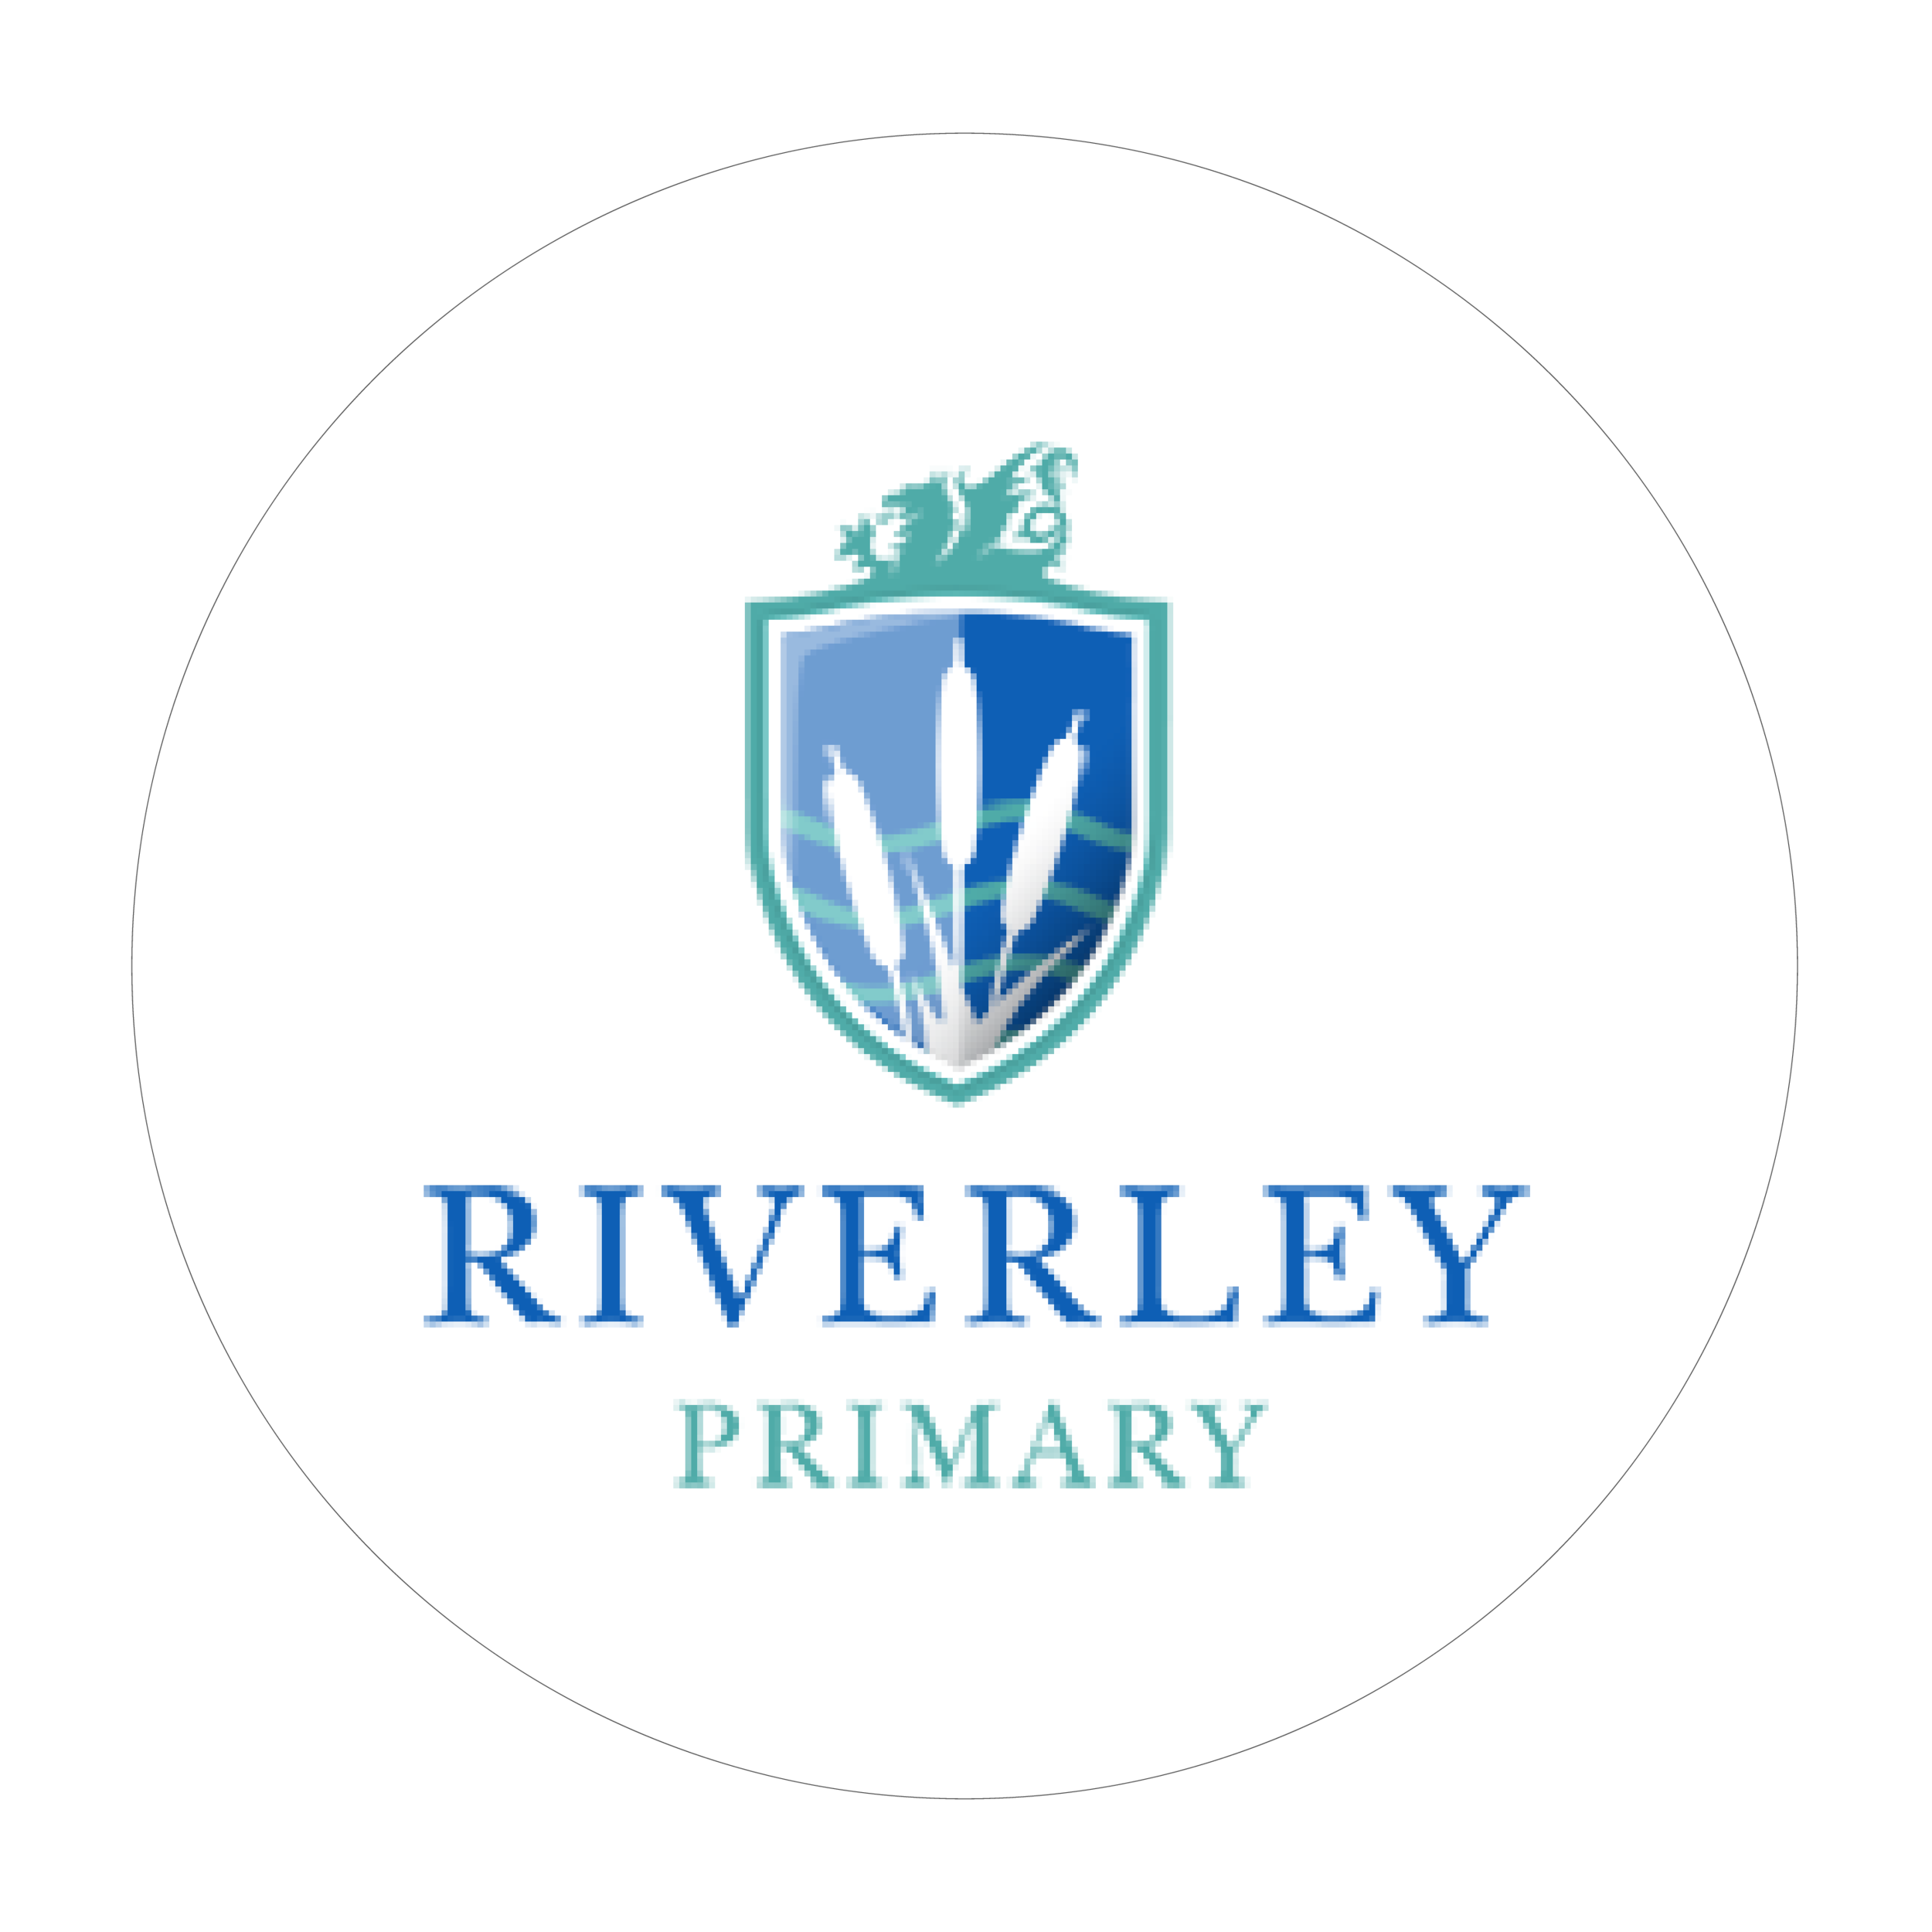 Riverley Primary School